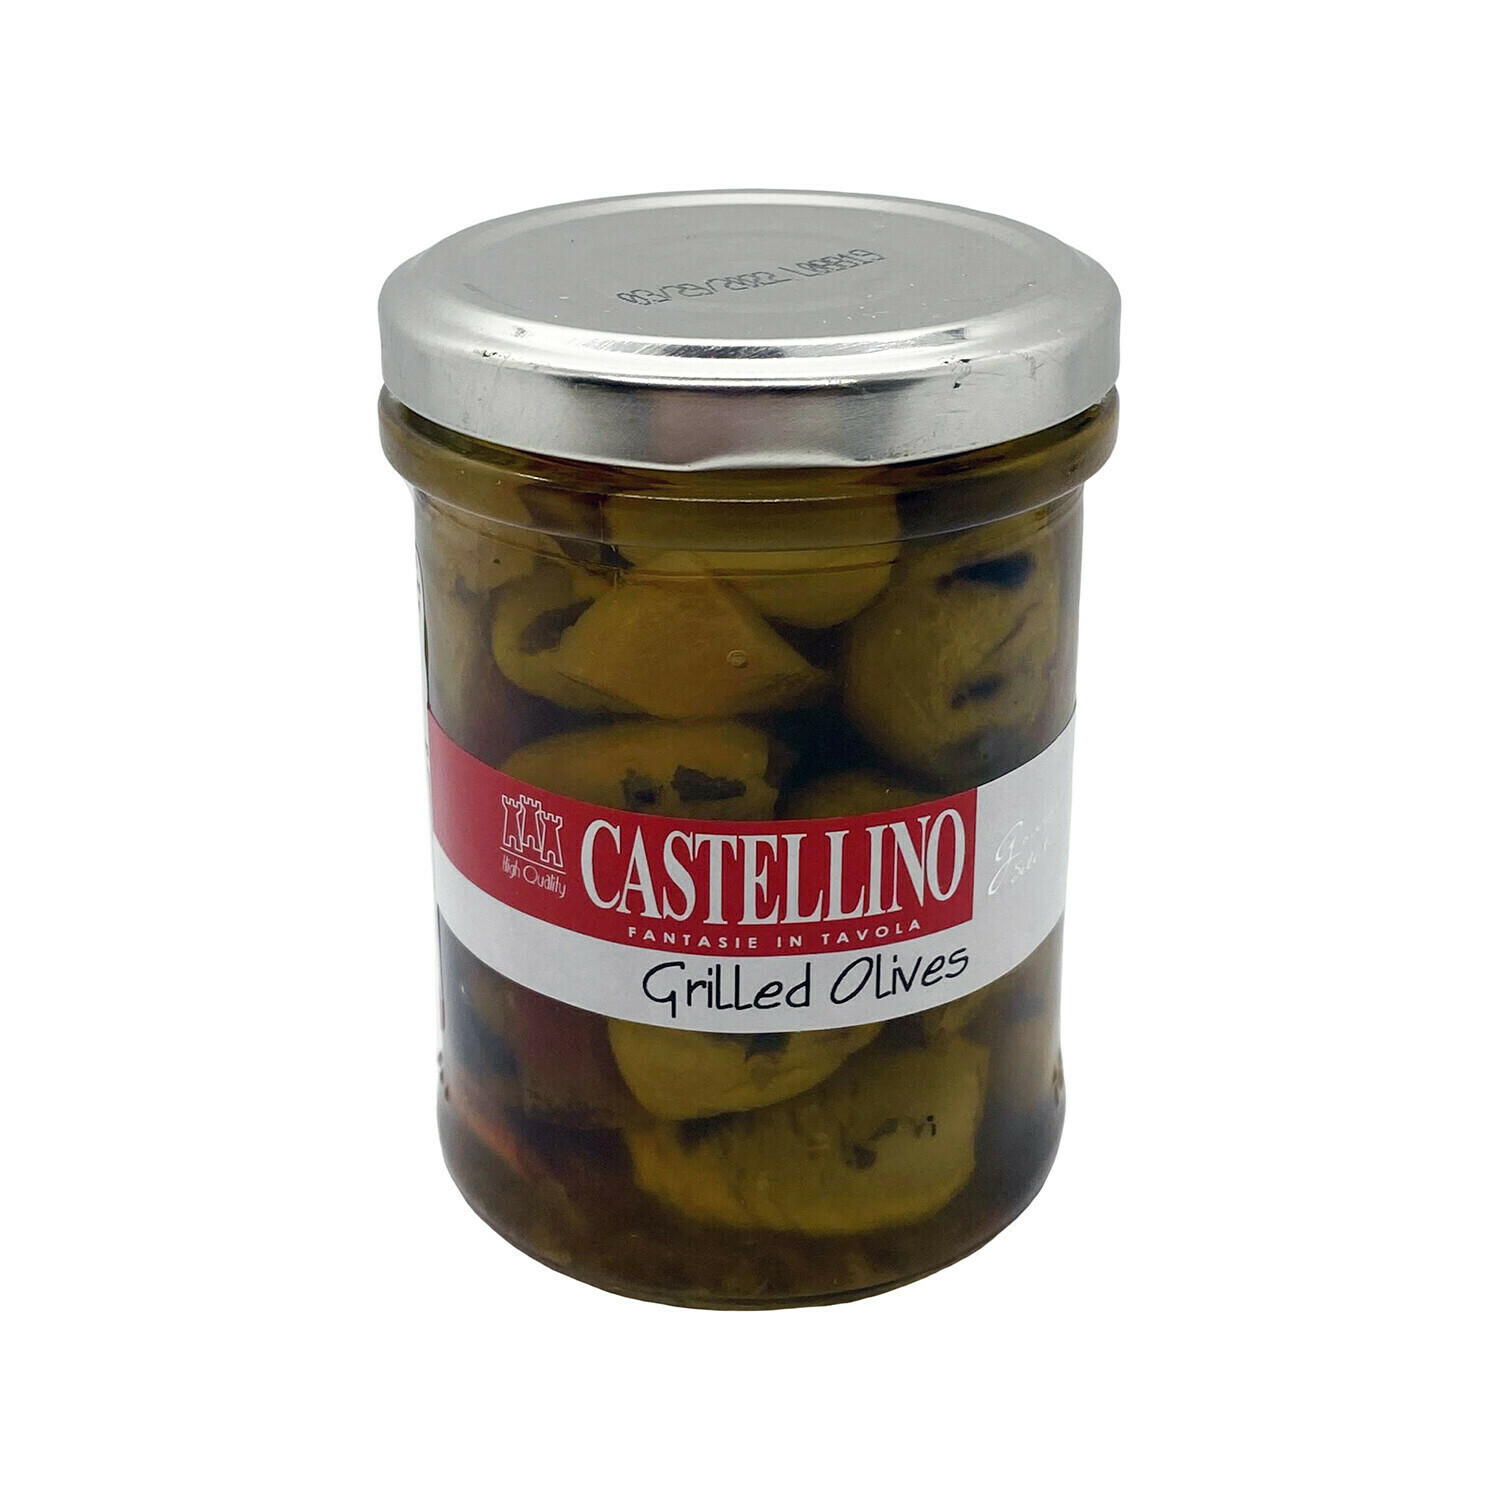 Castellino Grilled Olives Italy 6.5oz